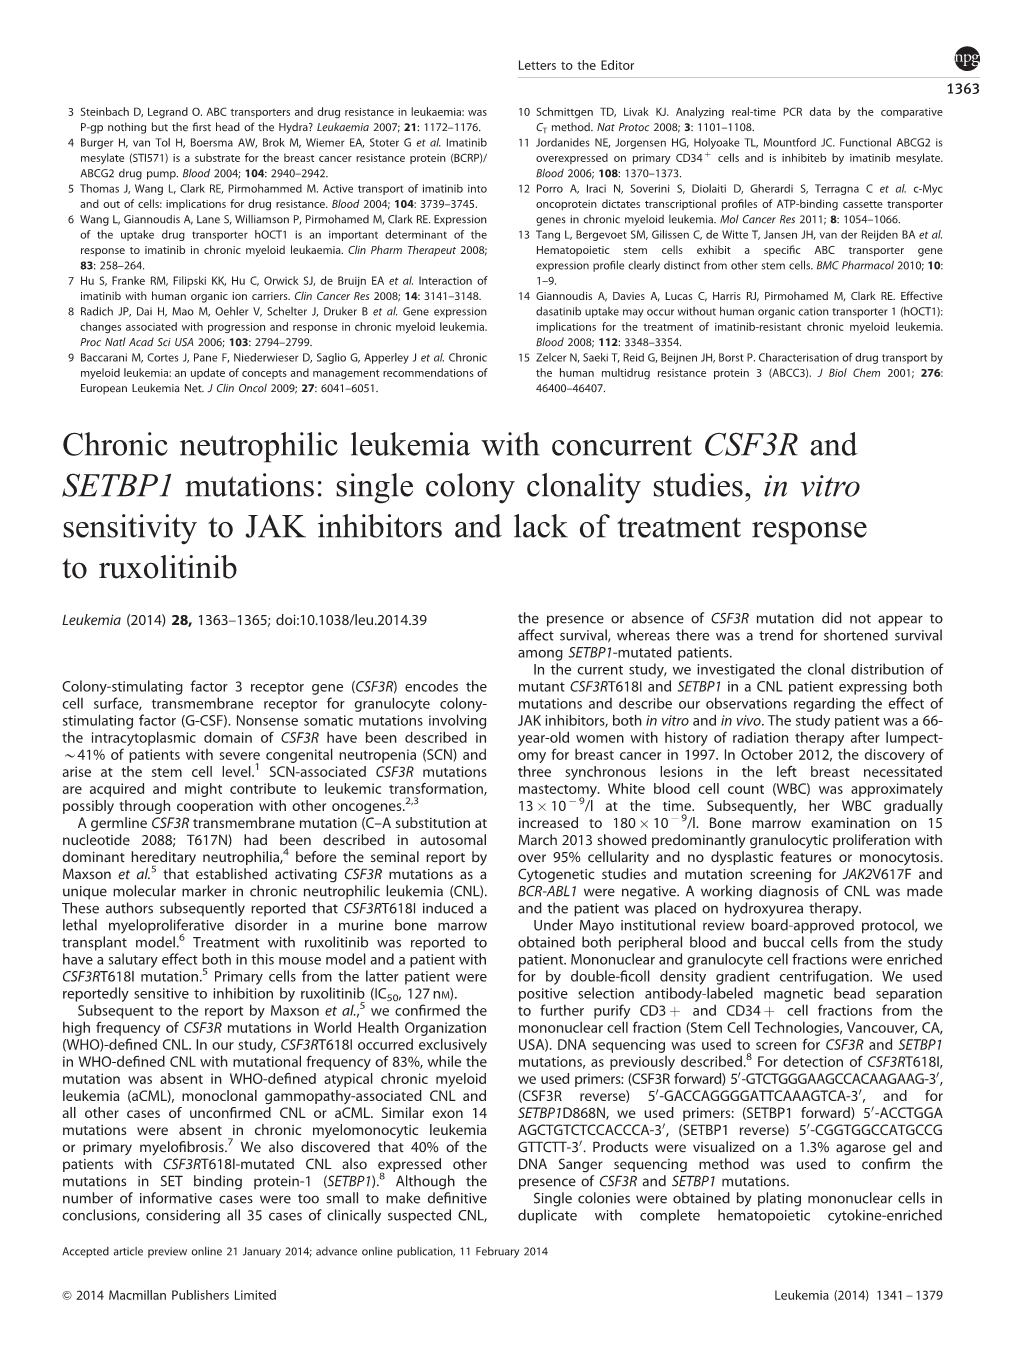 Chronic Neutrophilic Leukemia with Concurrent CSF3R And